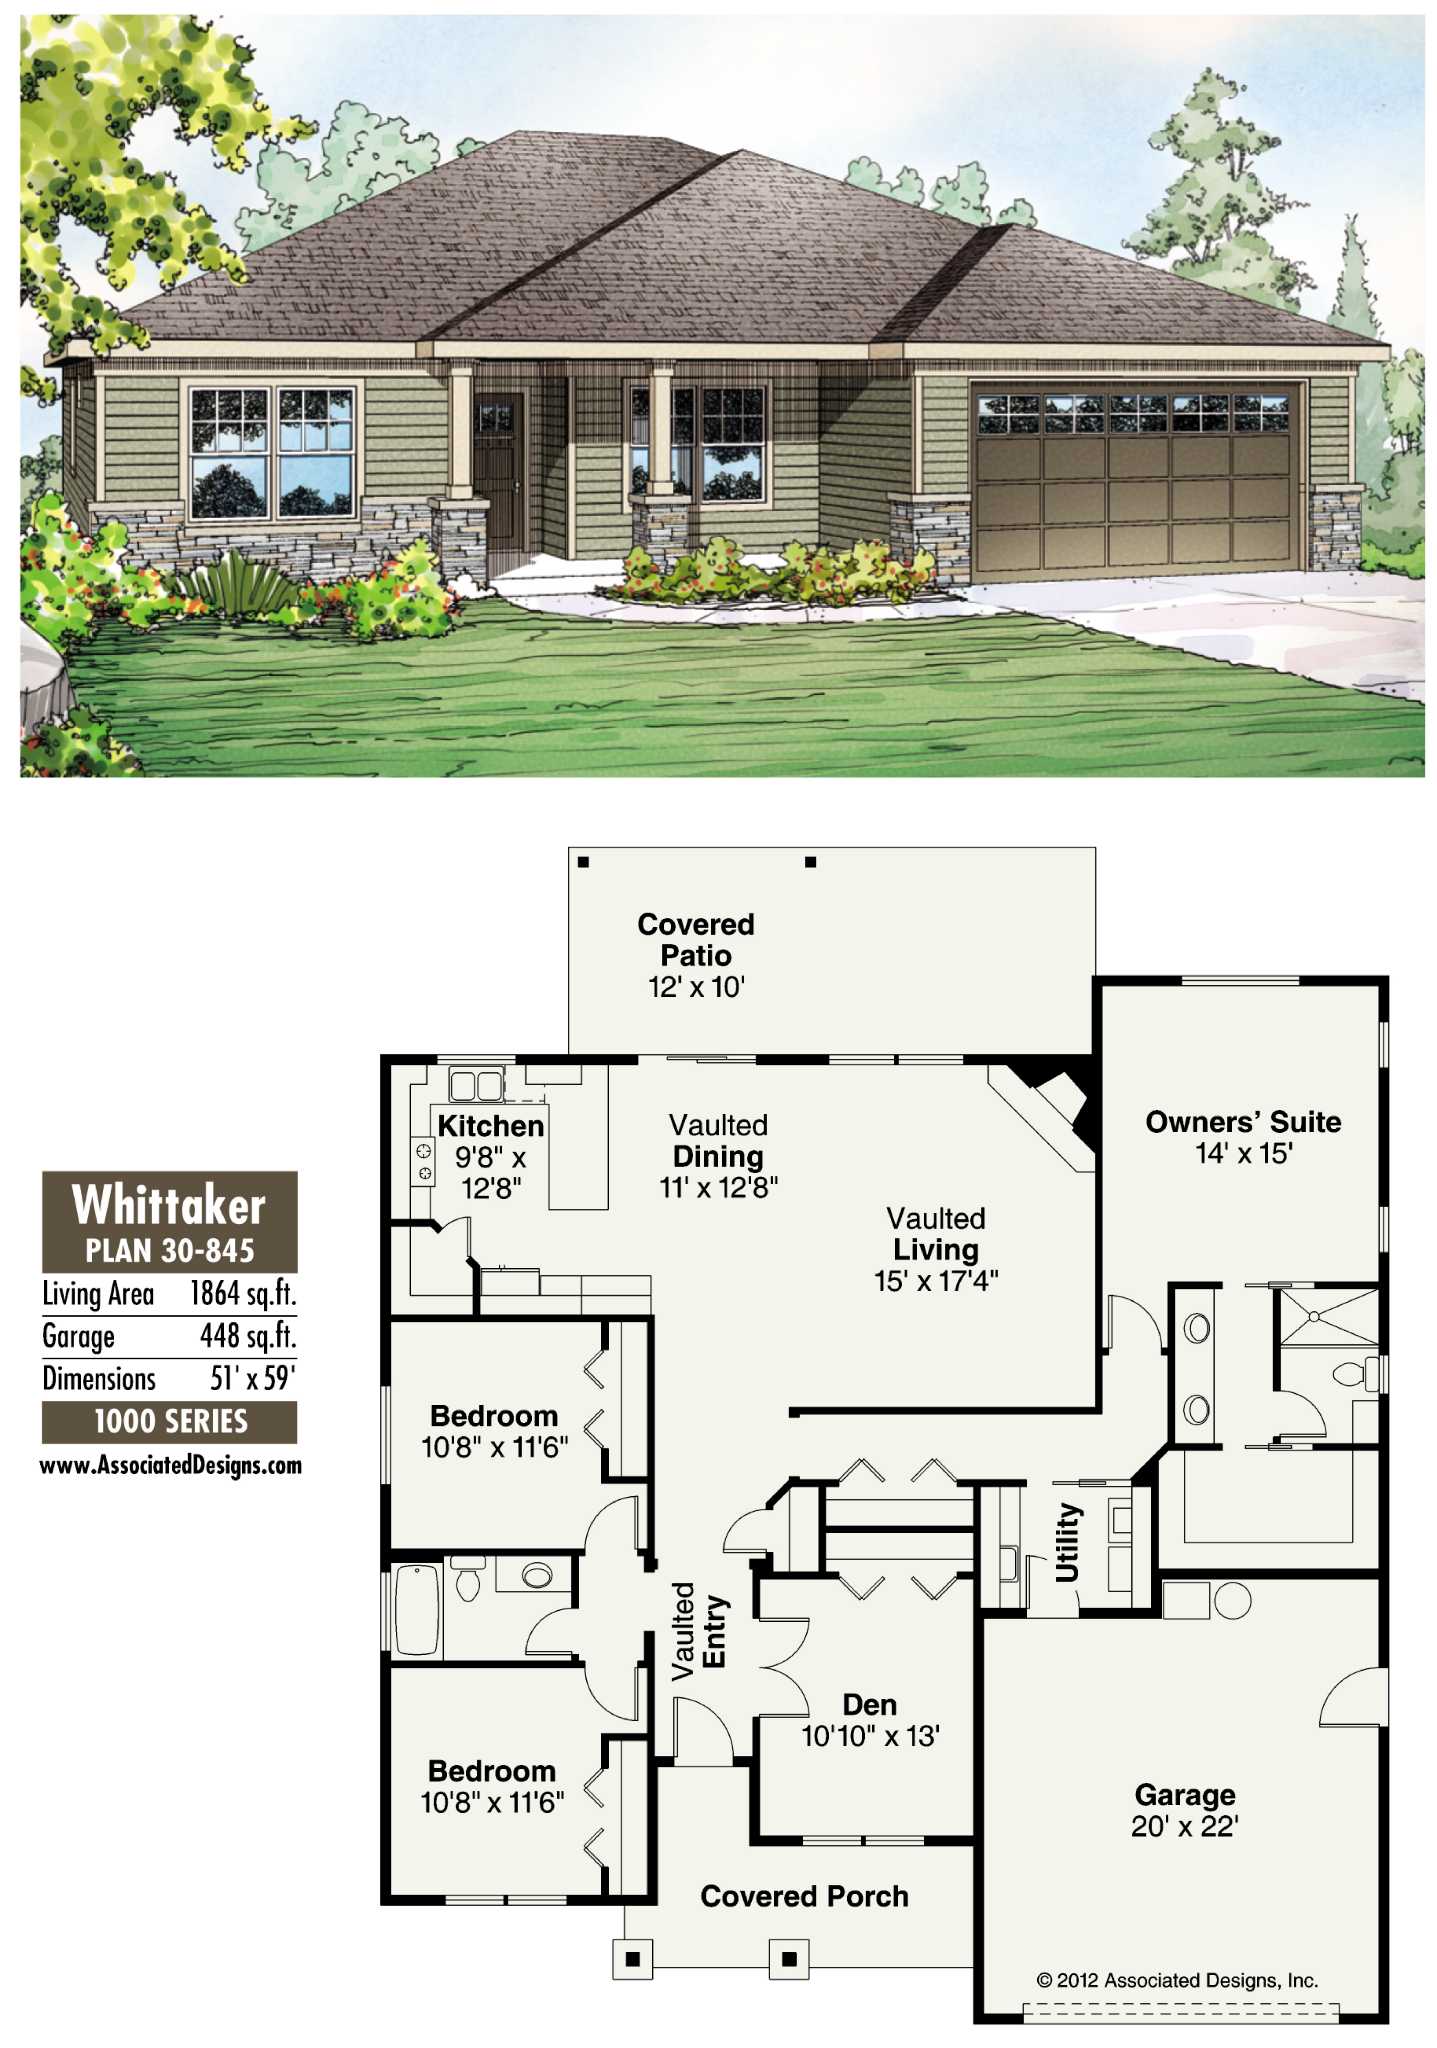 Home Blueprints Floor Plans - floorplans.click